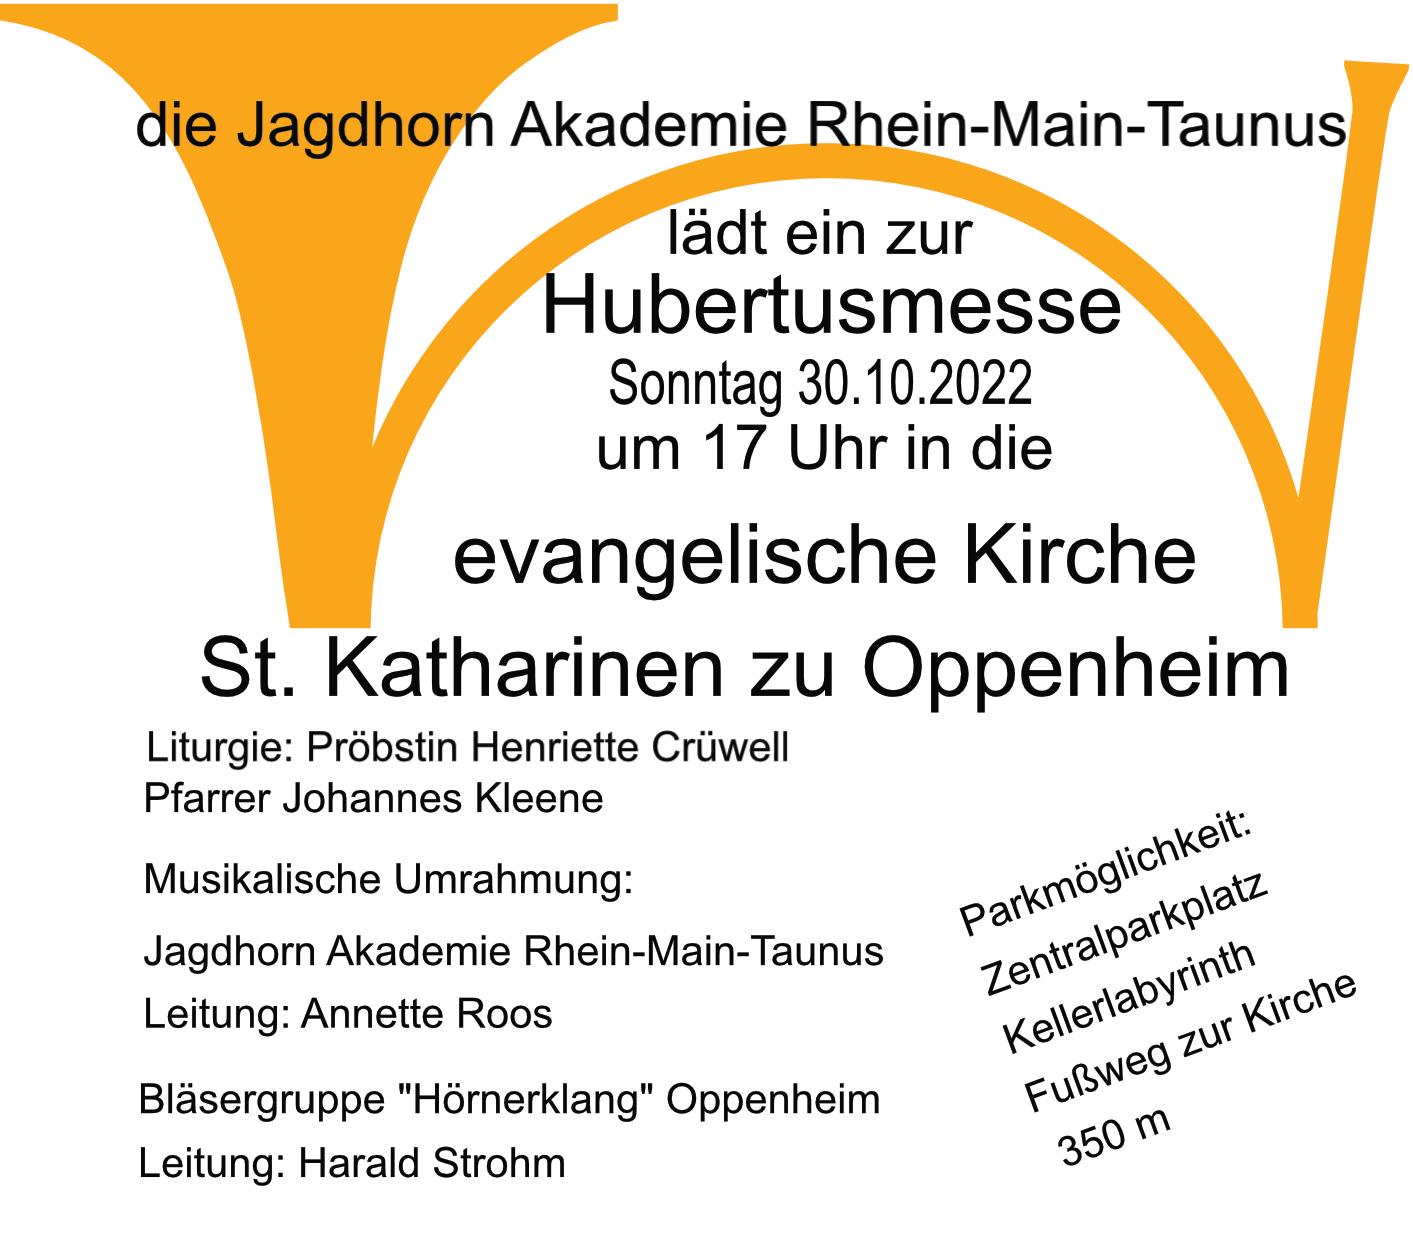 Hubertusmesse 30.10.2022 Jagdhorn Akademie Rhein-Main-Taunus (1)